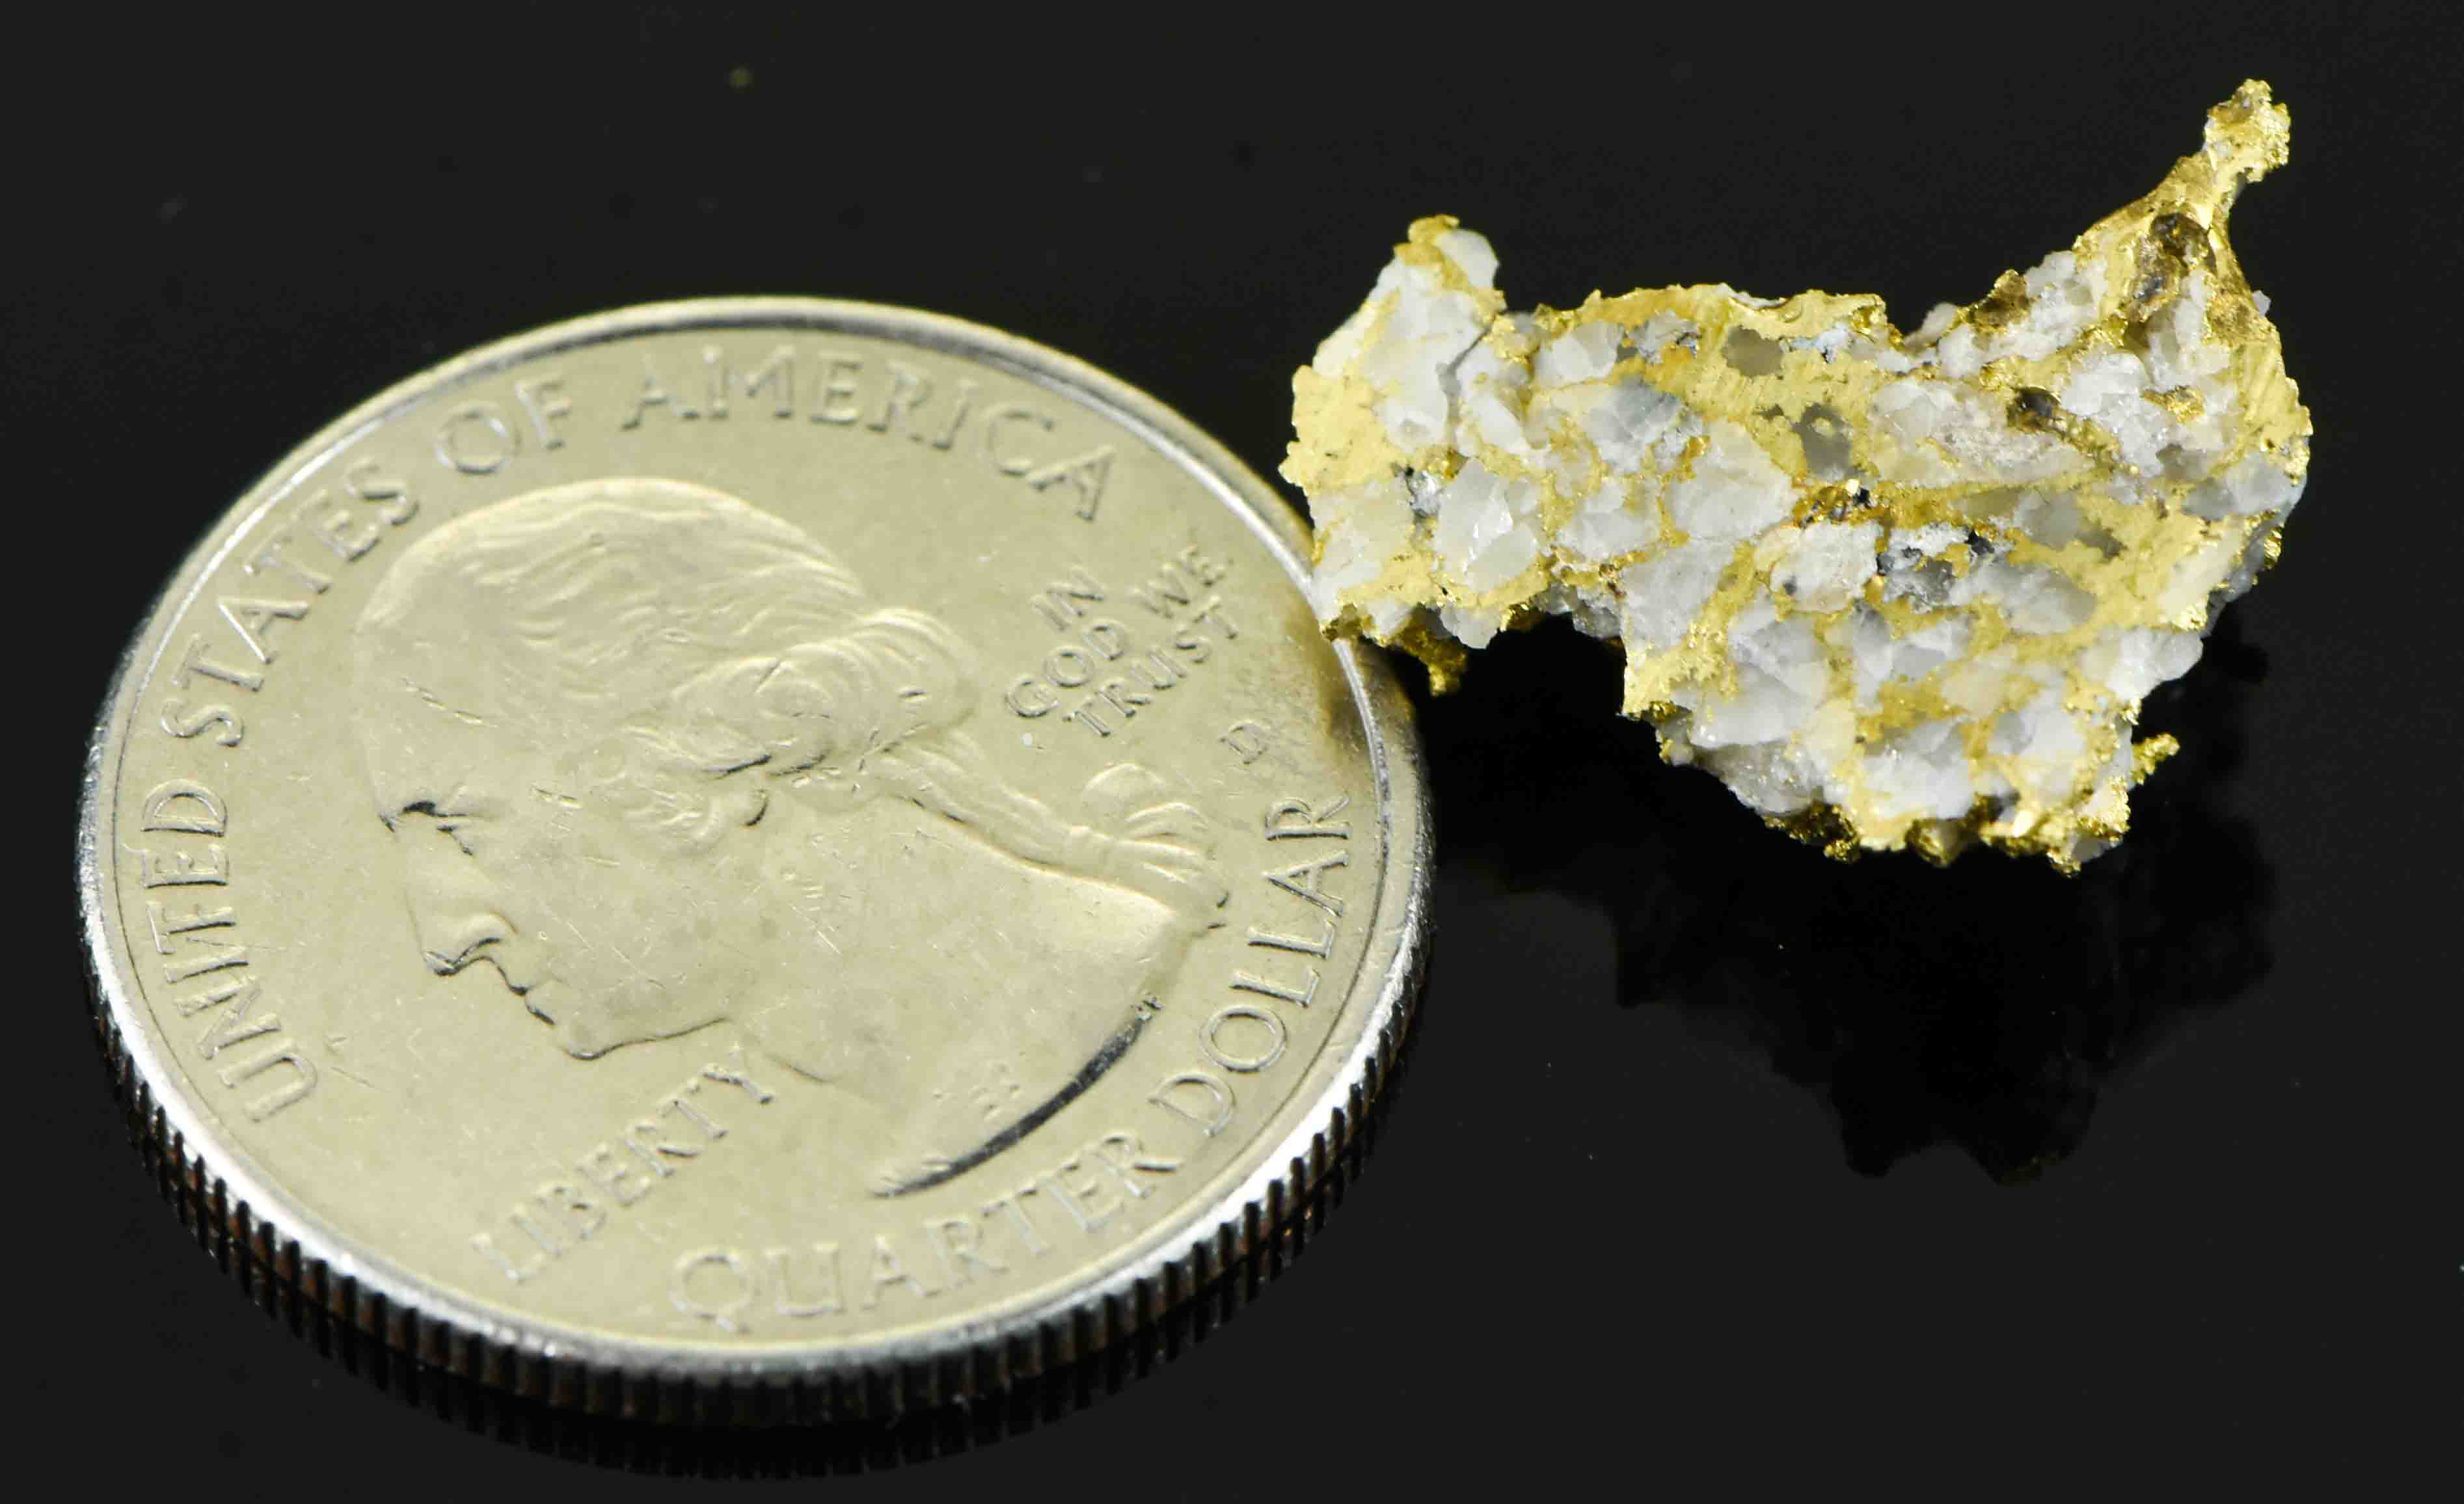 #OM-151 Crystalline Gold Nugget Specimen 3.57 Grams Oriental Mine Sierra County California Rare